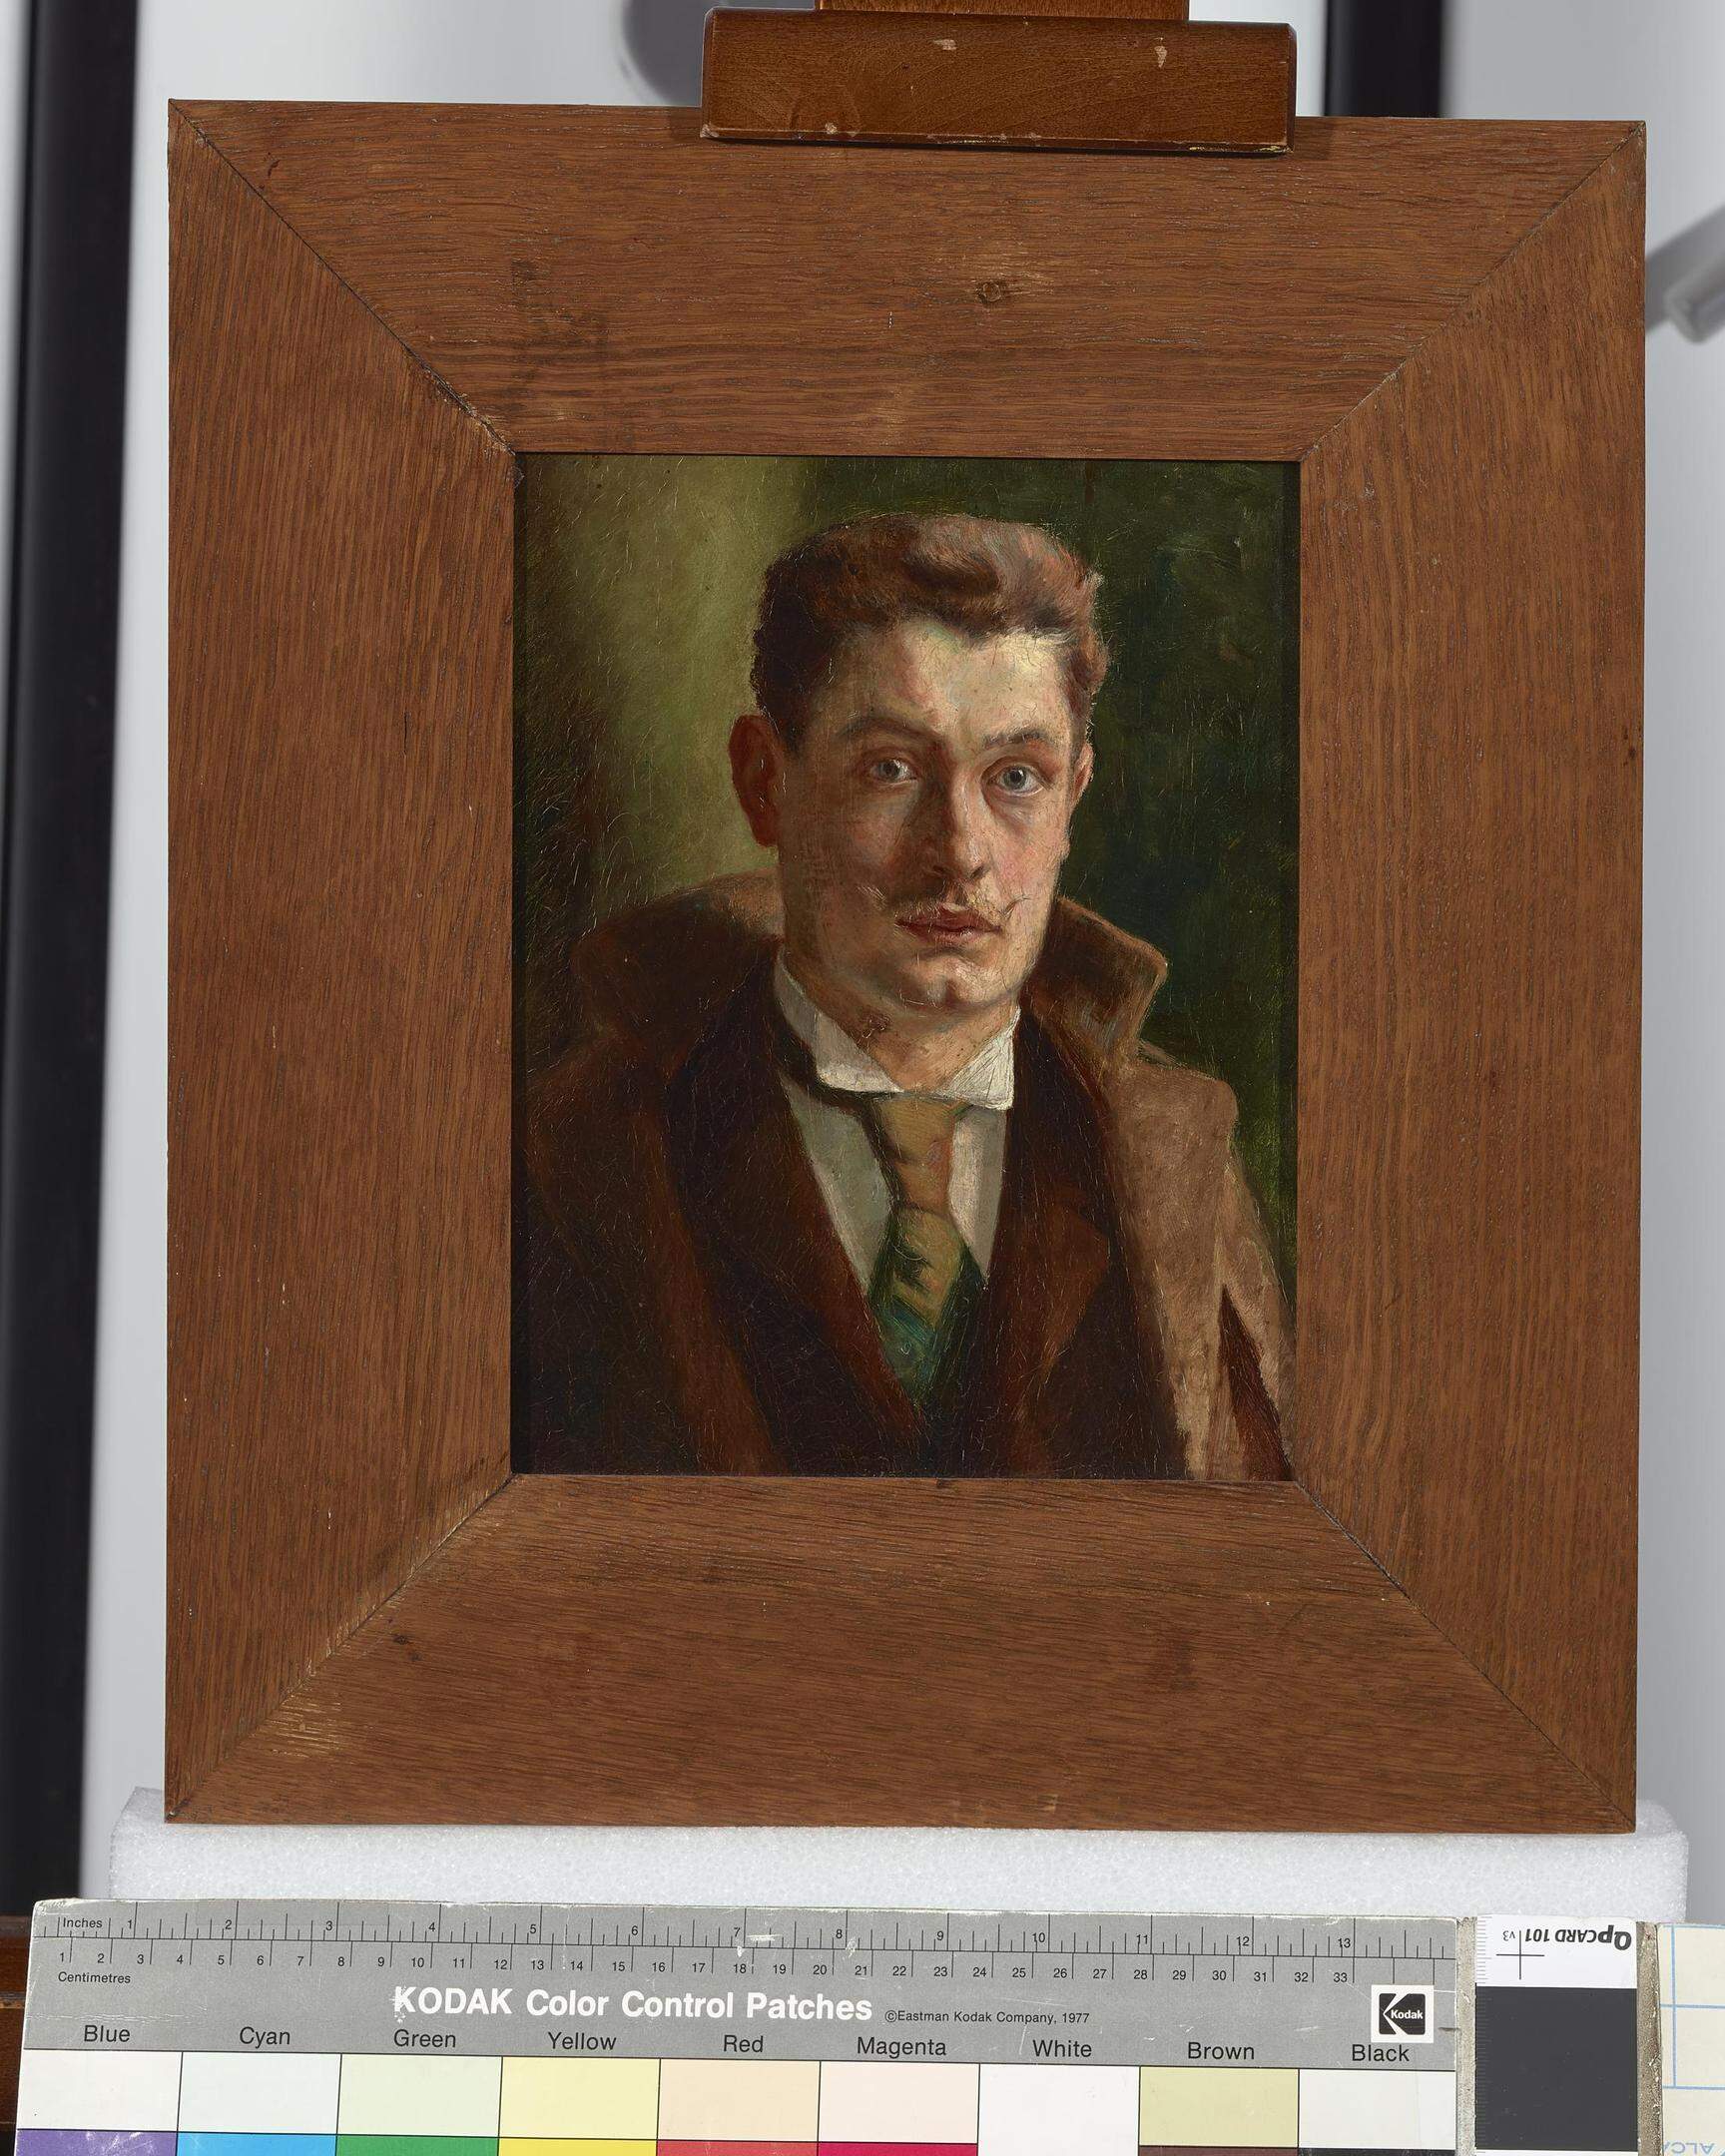 Dominique Lang, Selbstporträt im Alter von 25 Jahren, um 1899, Öl auf Holz, 25 x 20 cm, Musée national d‘histoire et d‘art Luxembourg  